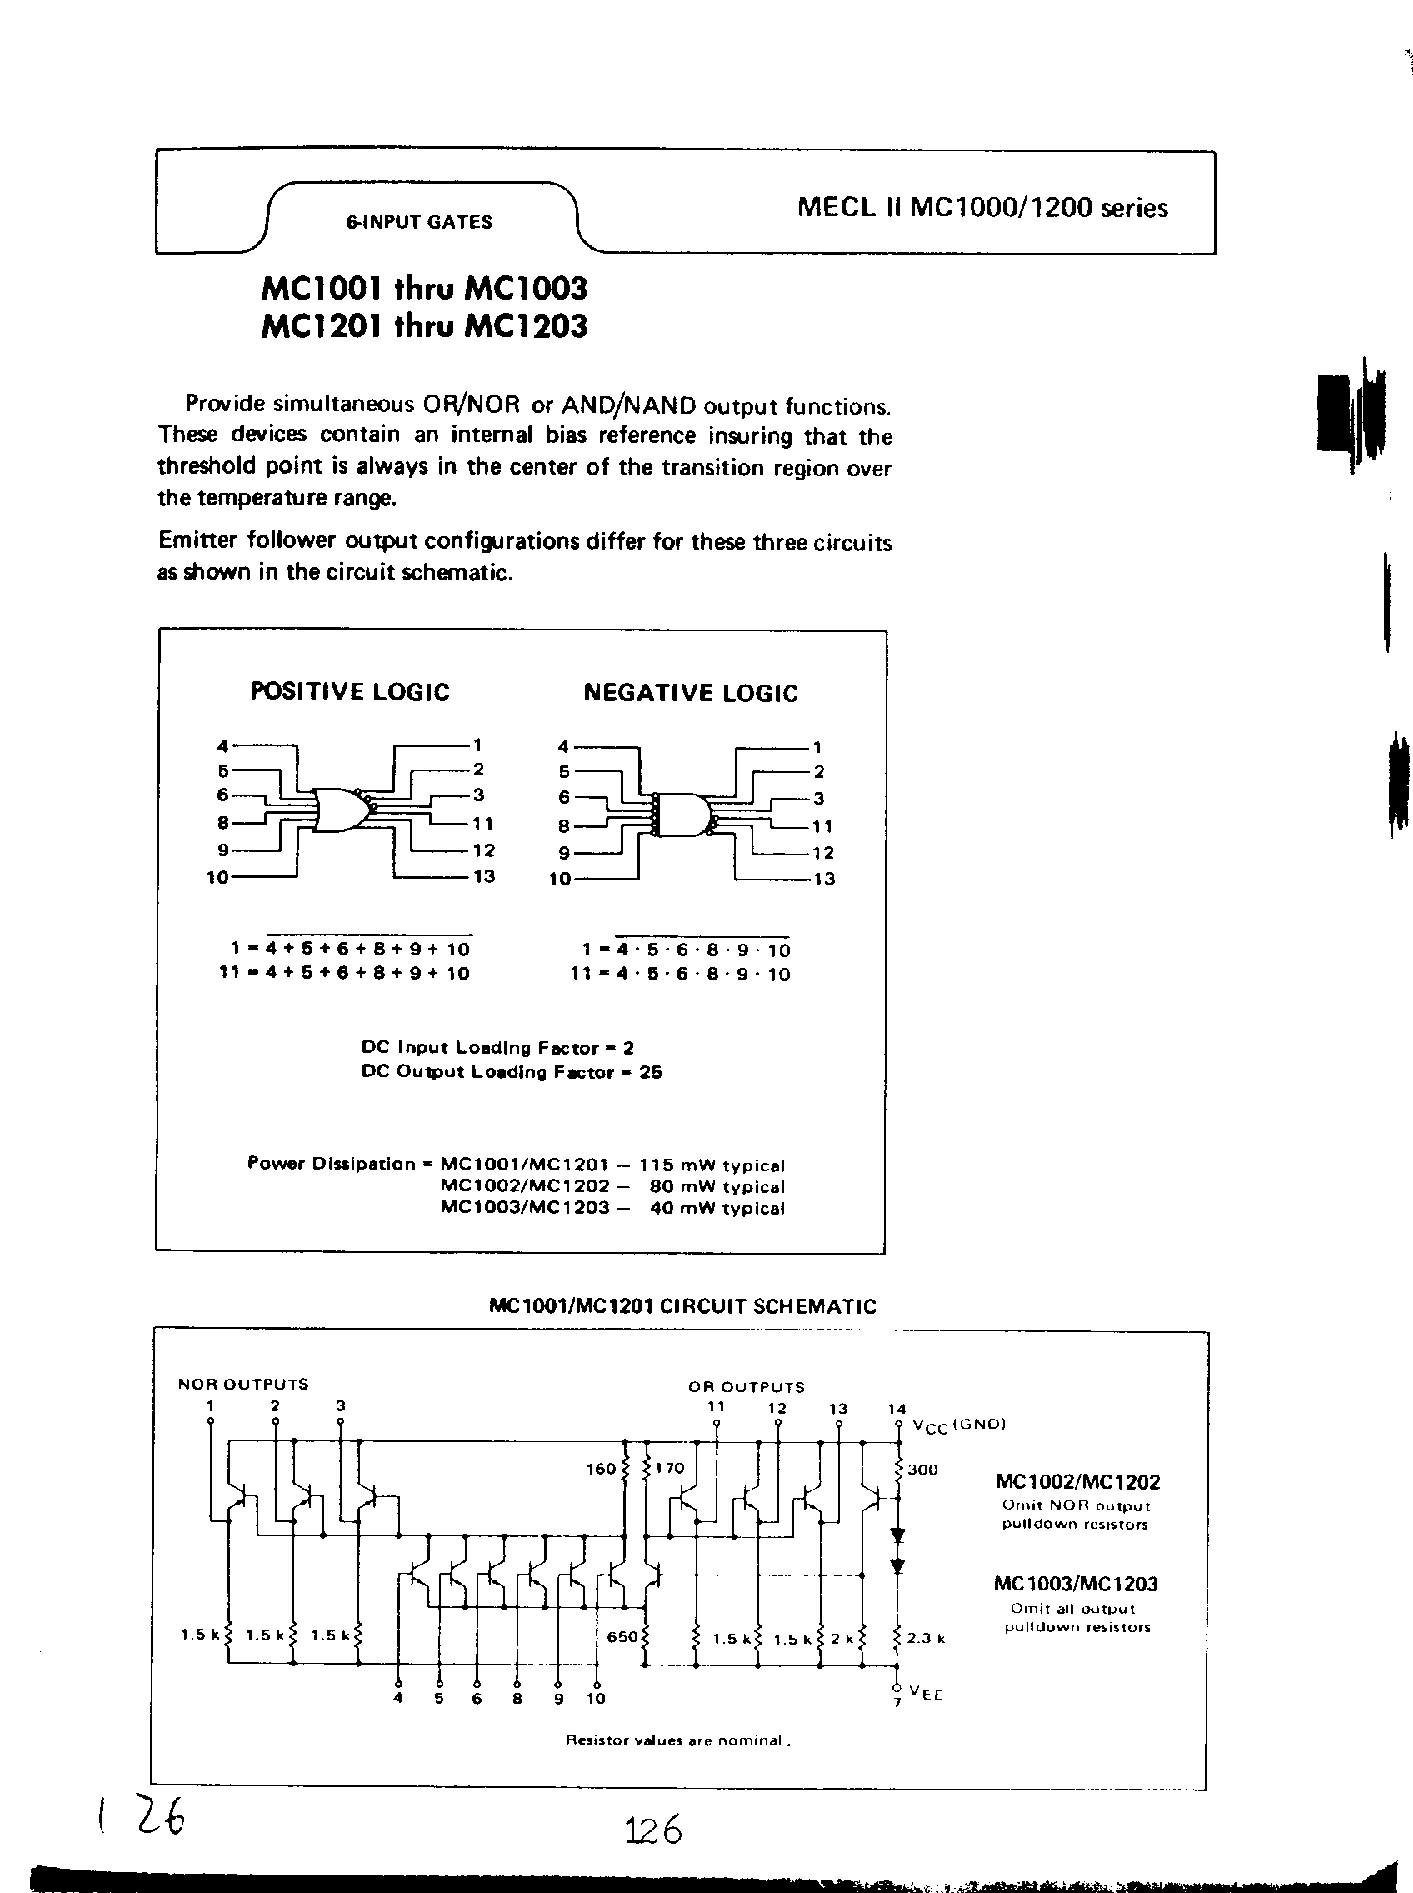 Даташит MC1001 - (MC1002 / MC1003) 6 input Gates страница 1